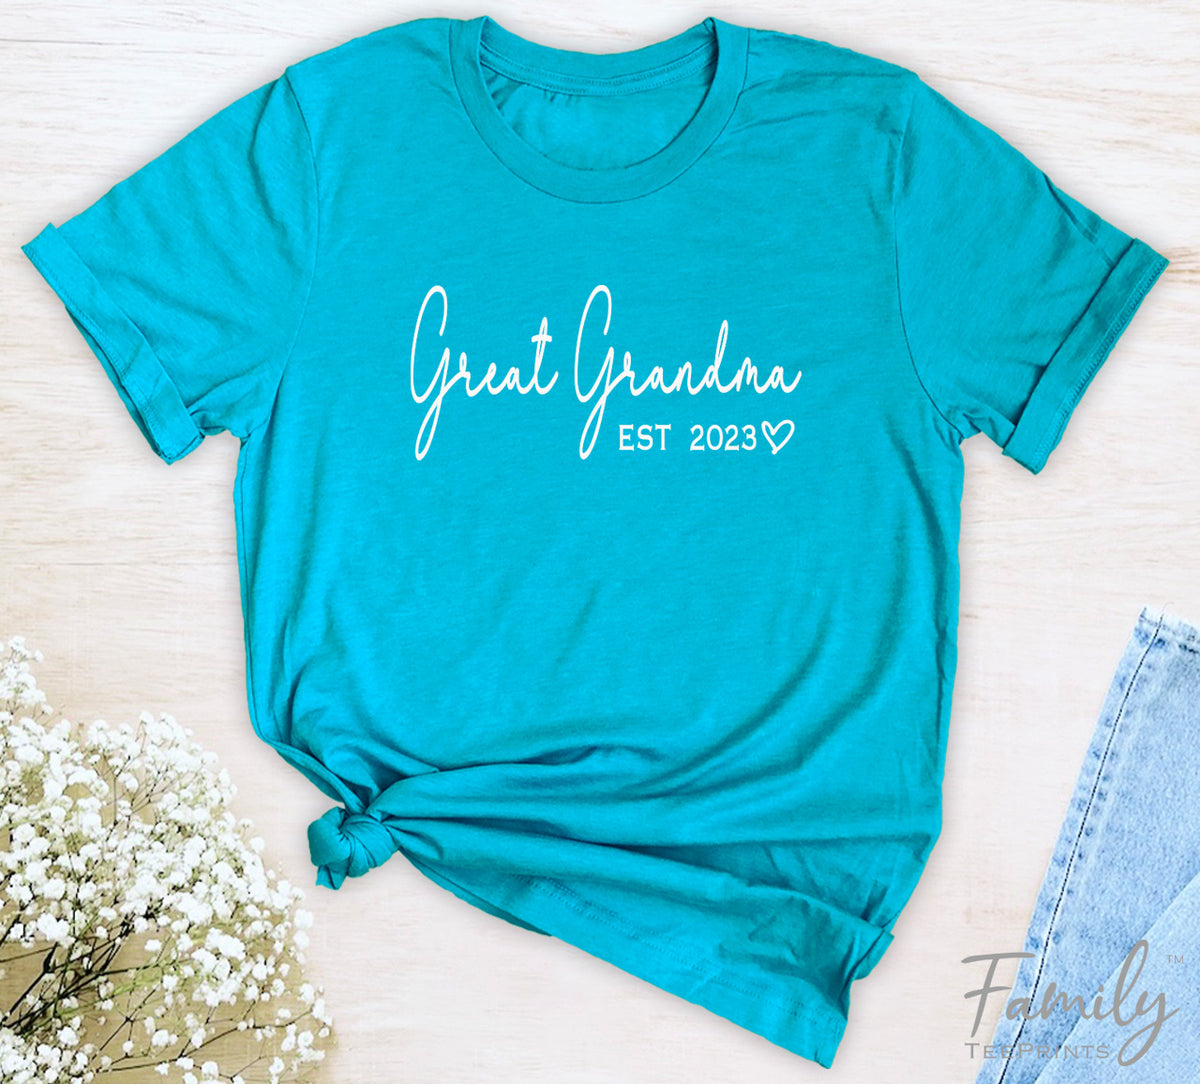 Great Grandma Est. 2023 - Unisex T-shirt - Great Grandma Shirt - Gift For Great Grandma To Be - familyteeprints